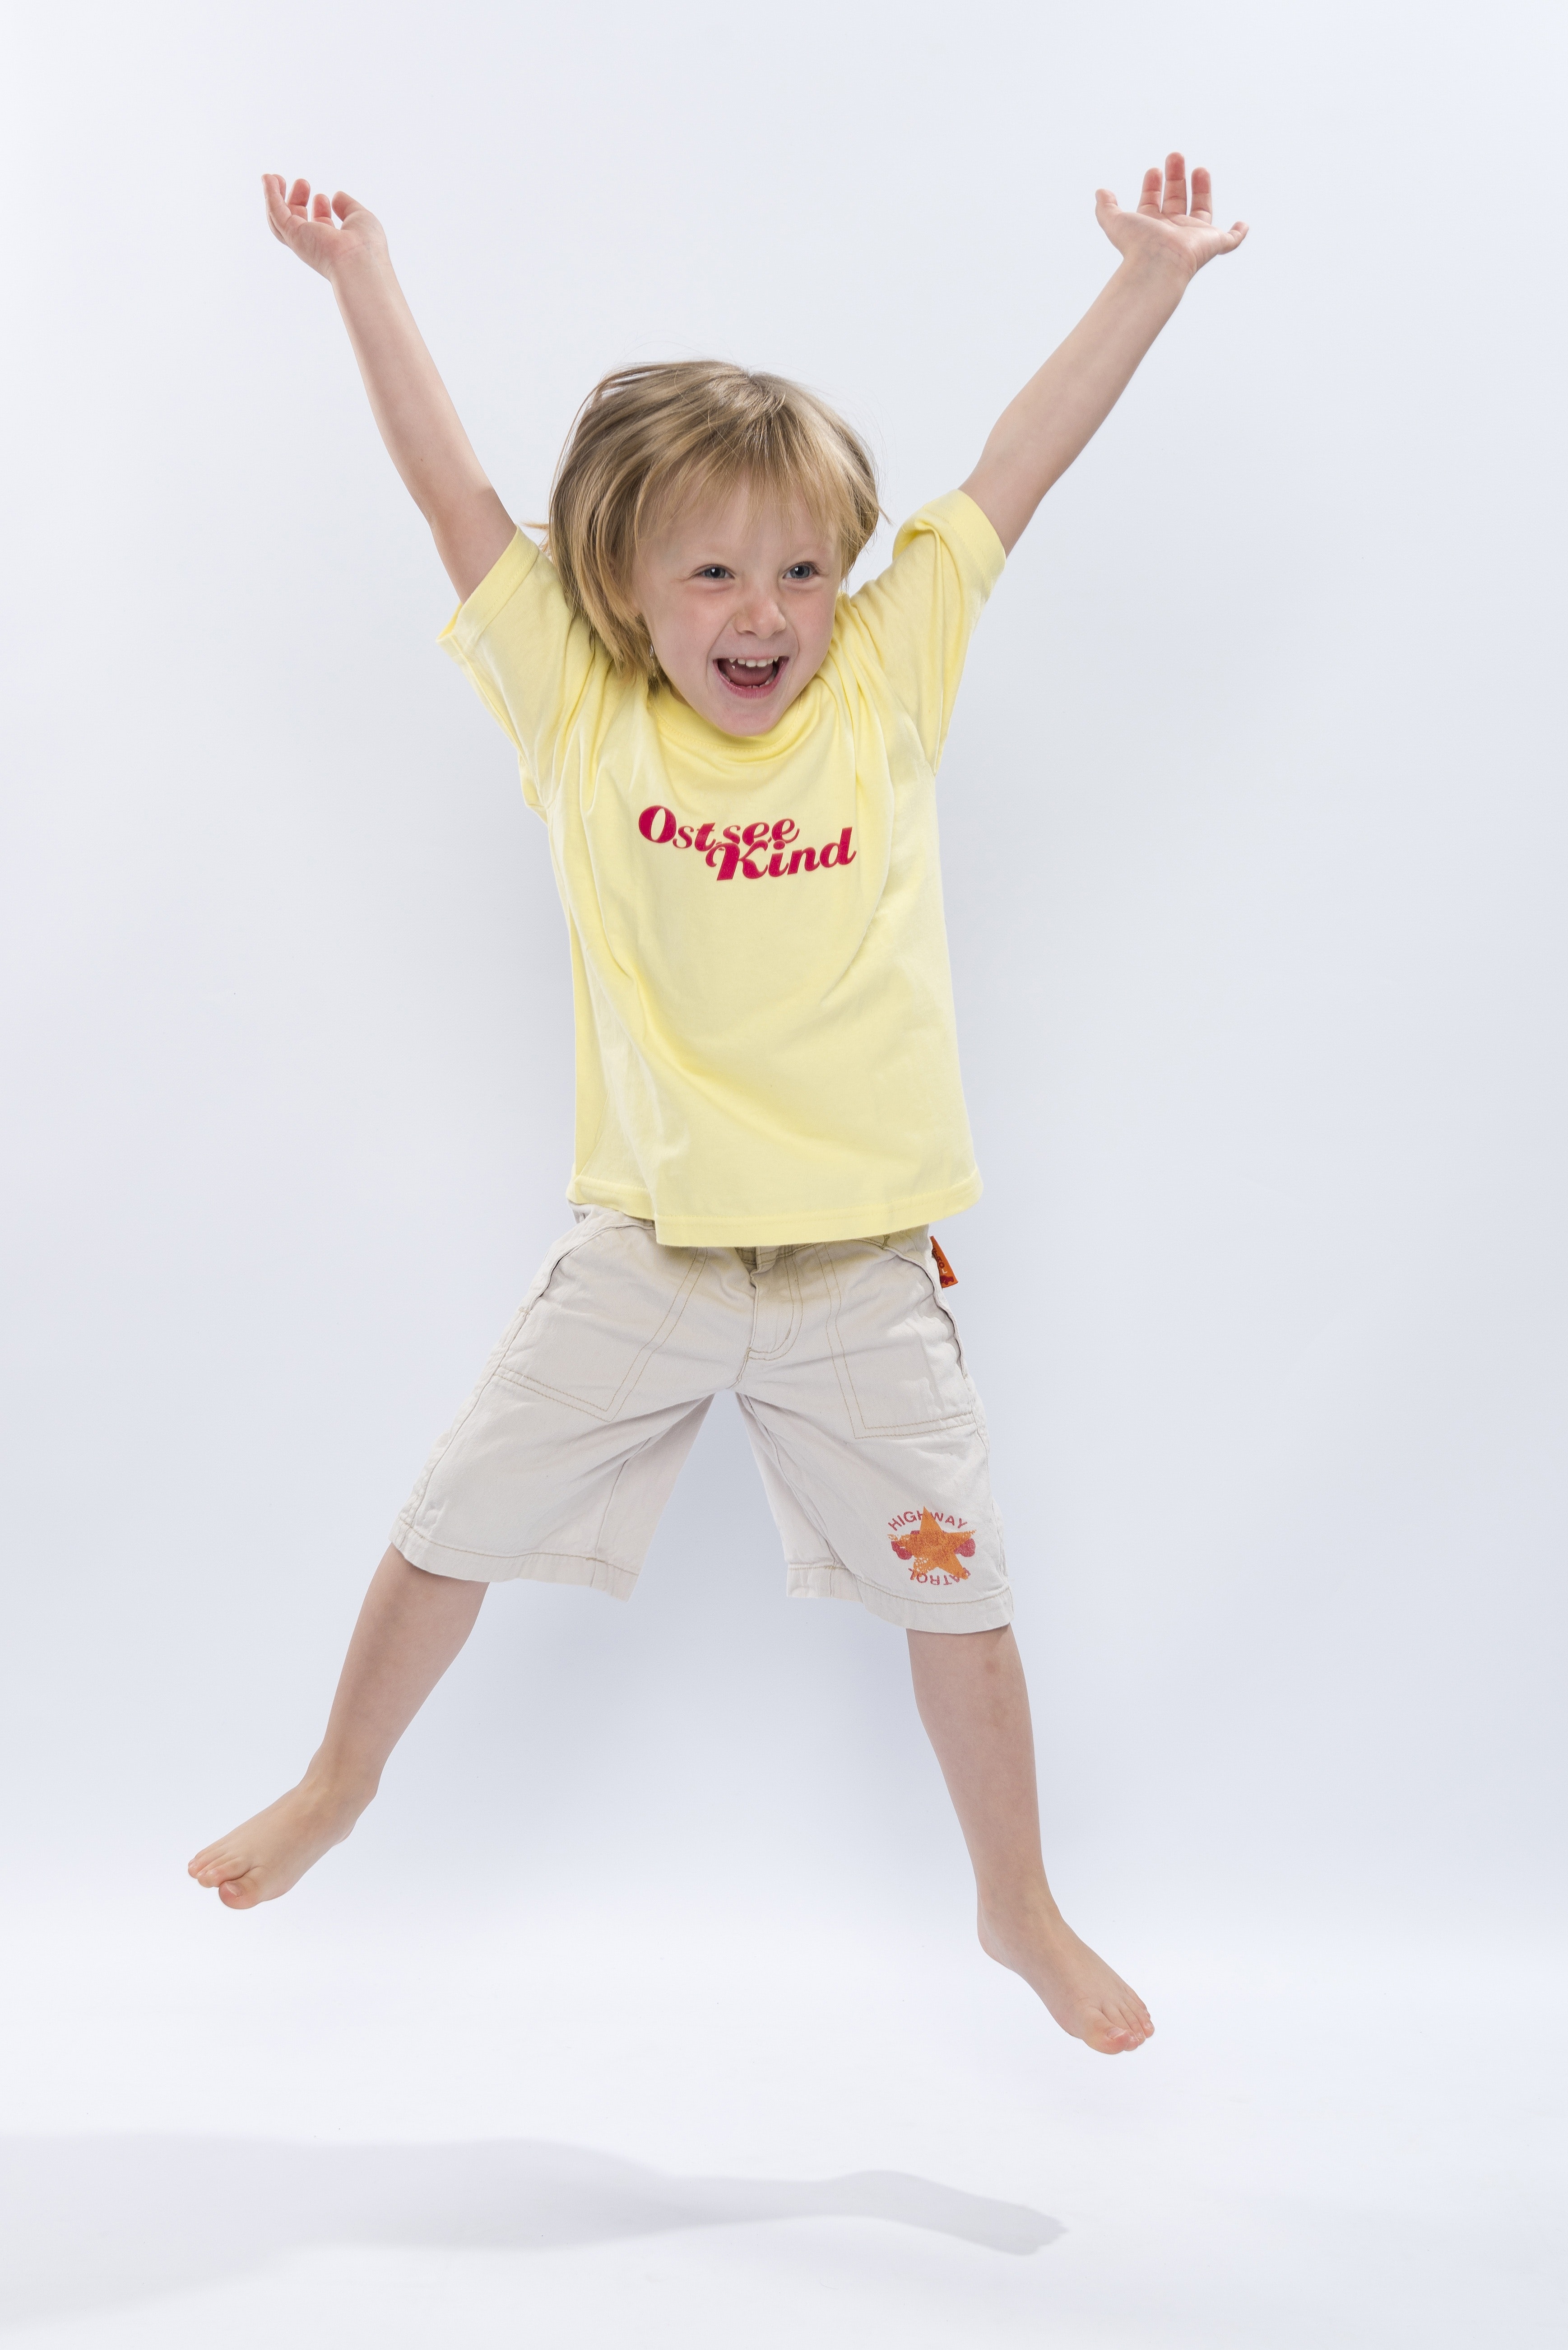 Free stock photo of air jump, cheerful, child